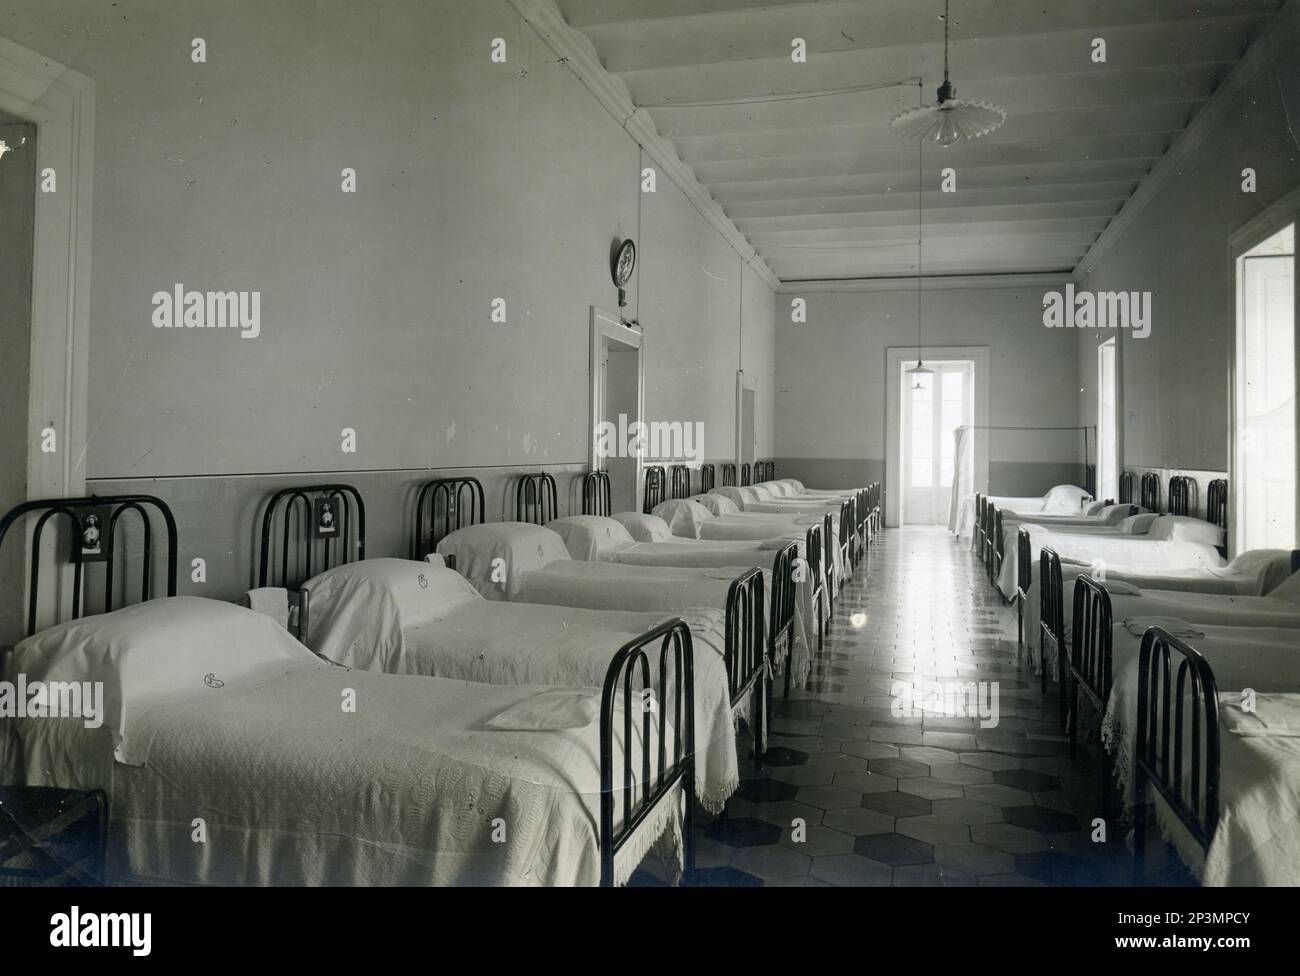 Female school dormitory, beds, Italy Stock Photo